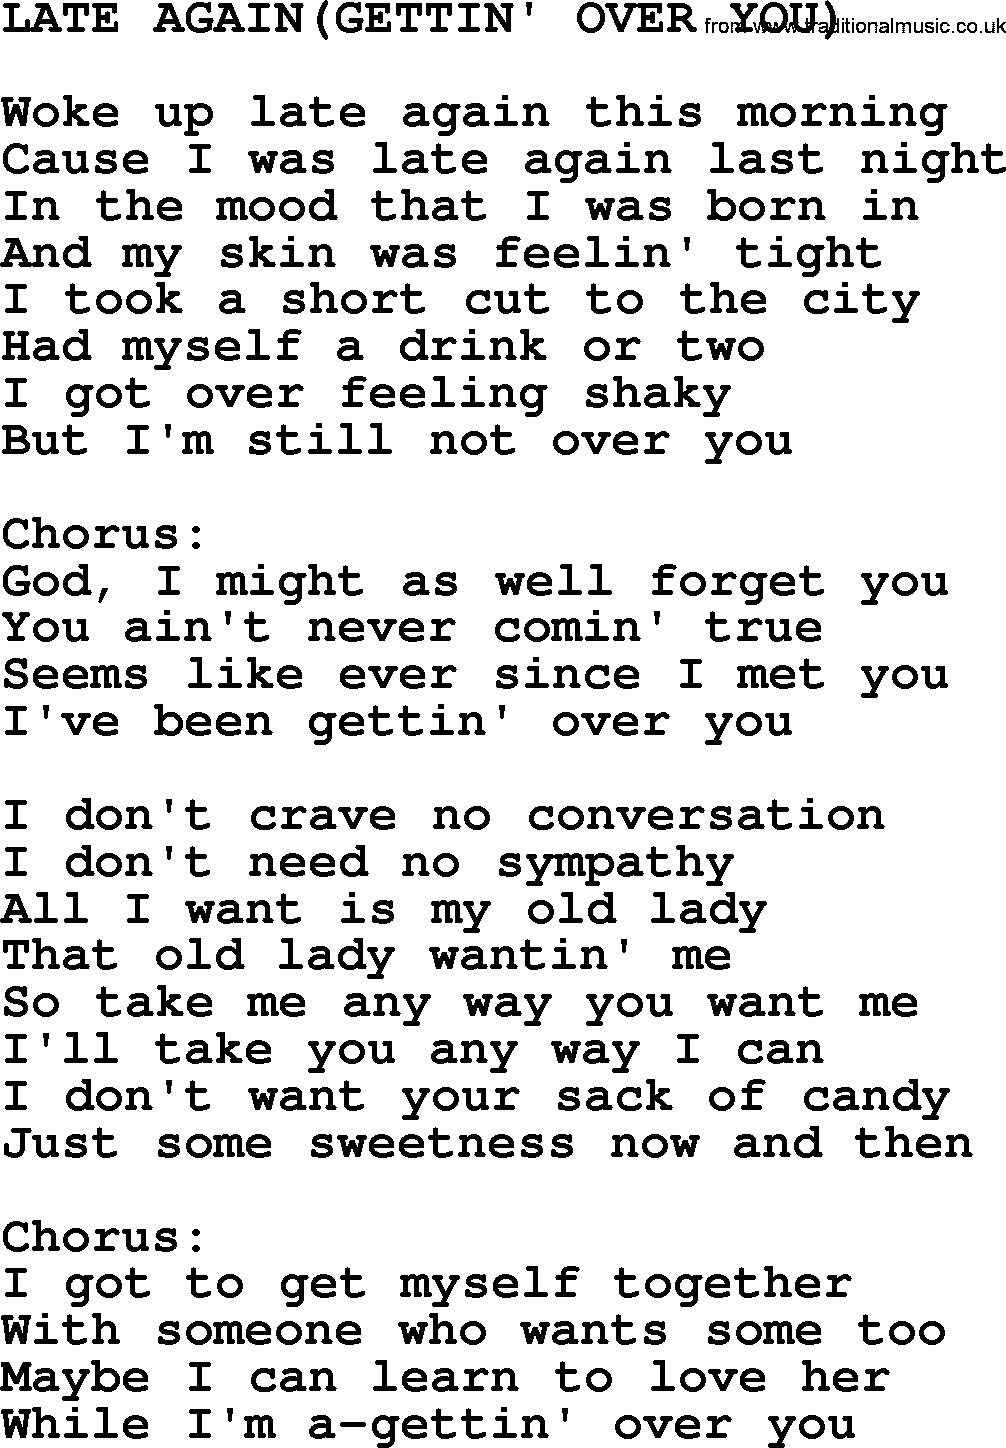 Kris Kristofferson song: Late Again(gettin' Over You) lyrics